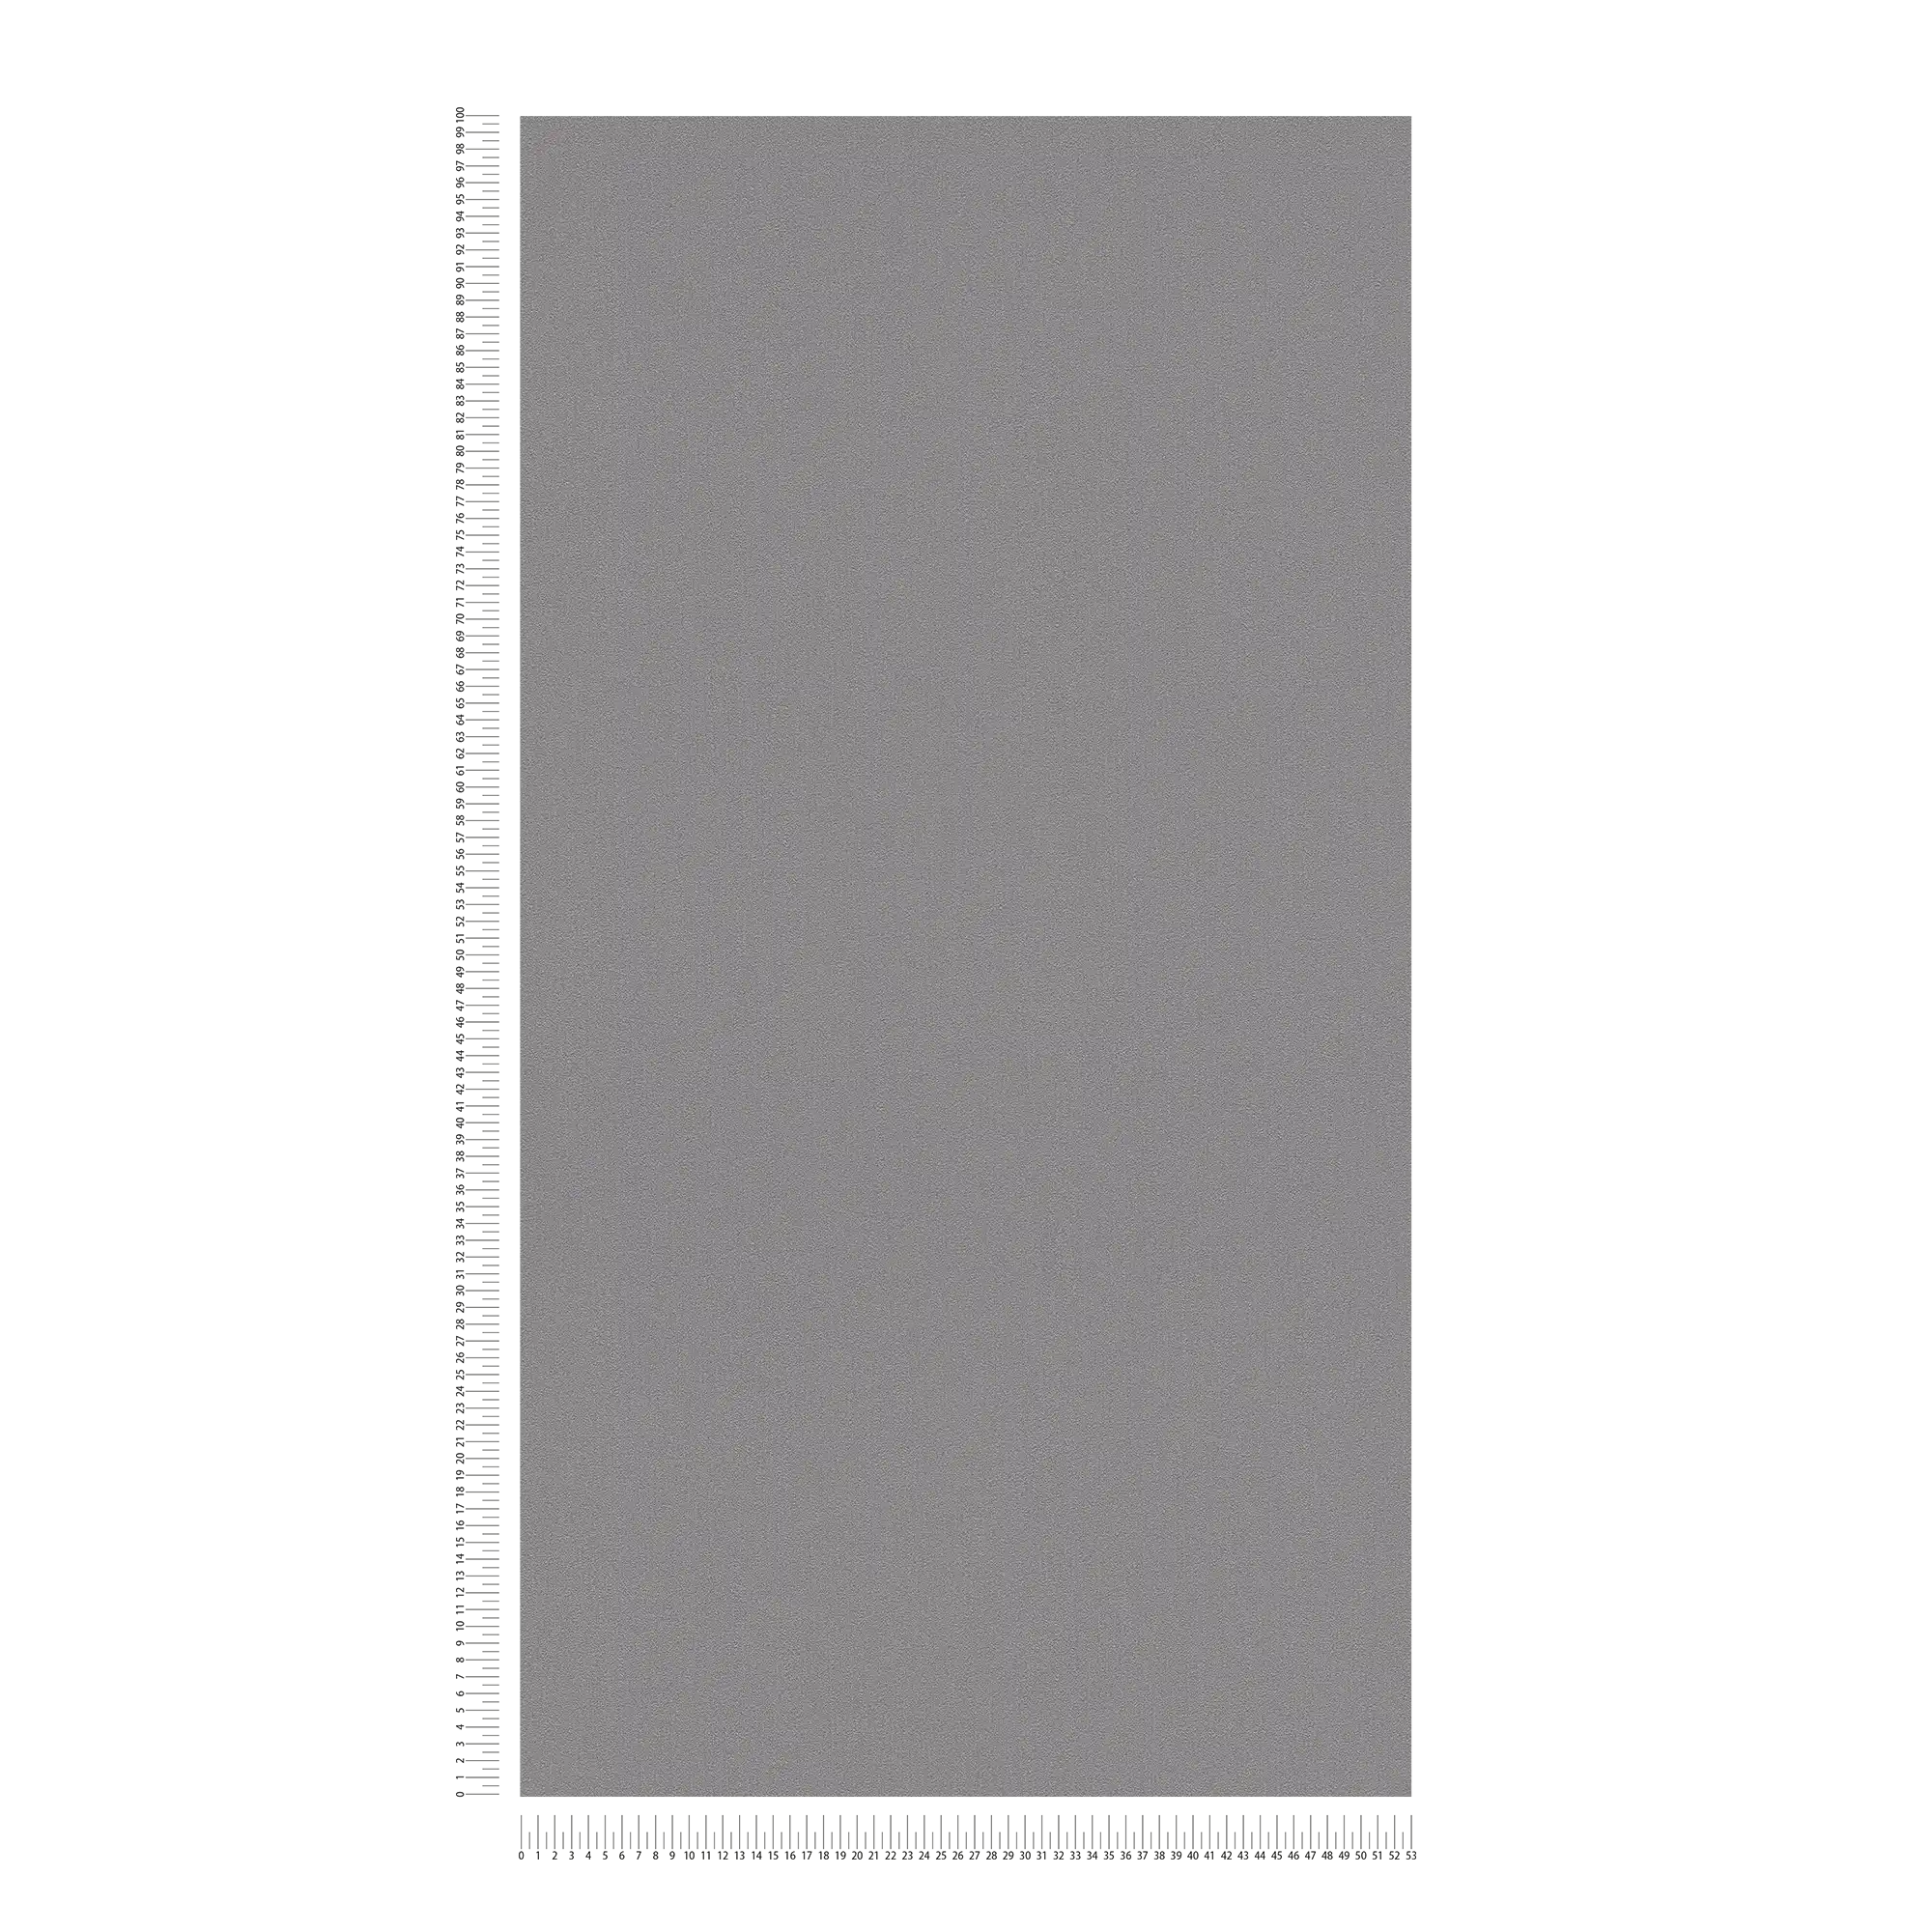             Karl LAGERFELD Tapete monochrom mit Textur – Grau
        